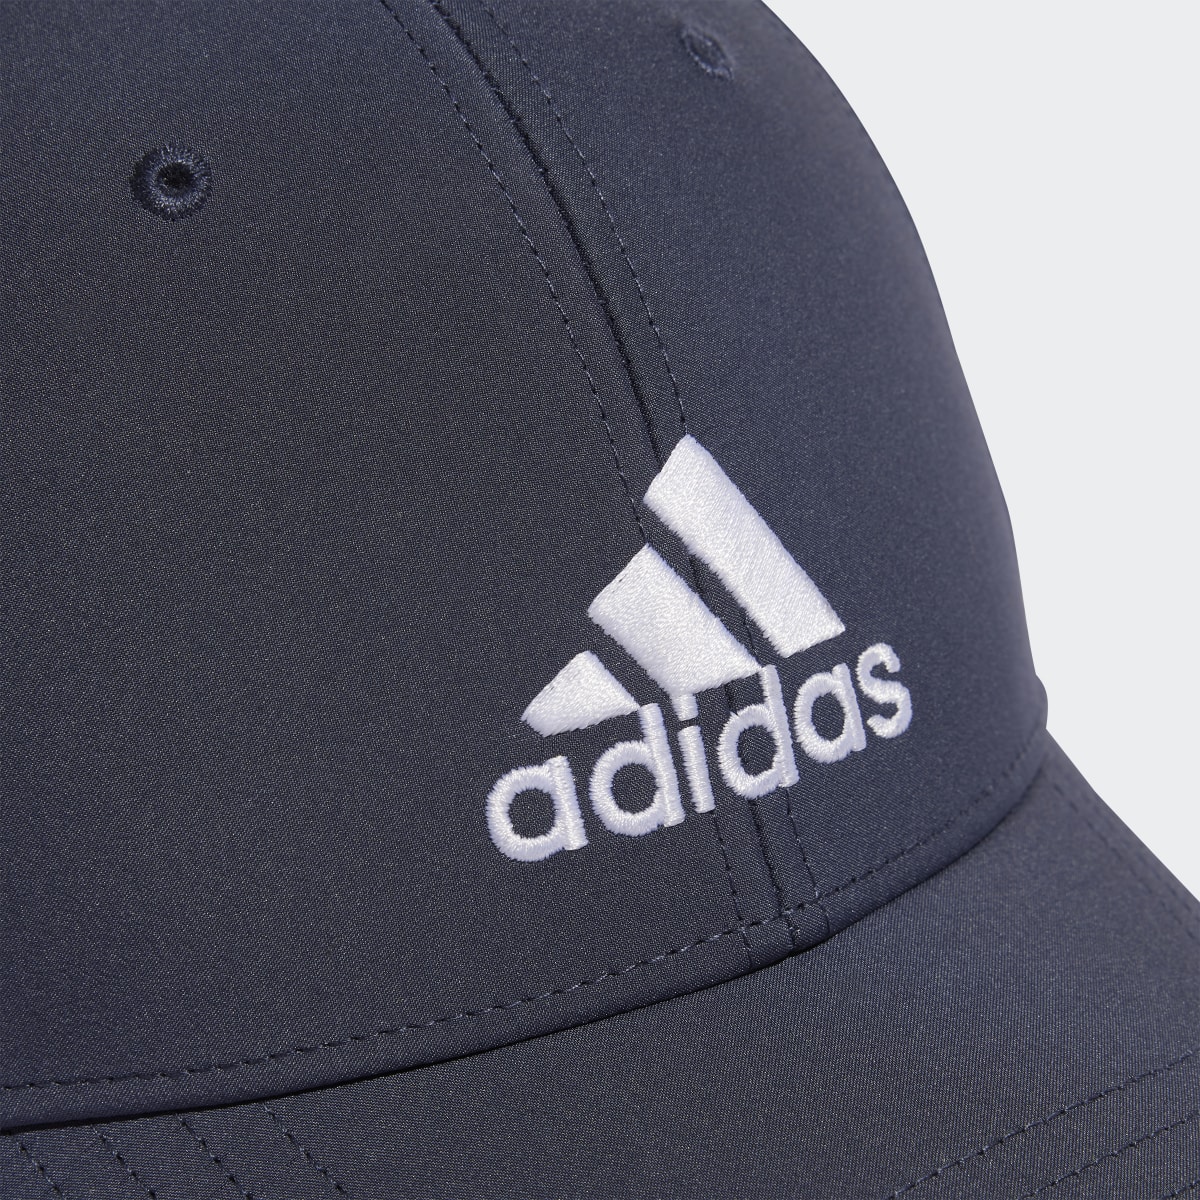 Adidas LIGHTWEIGHT EMBROIDERED BASEBALL CAP. 4